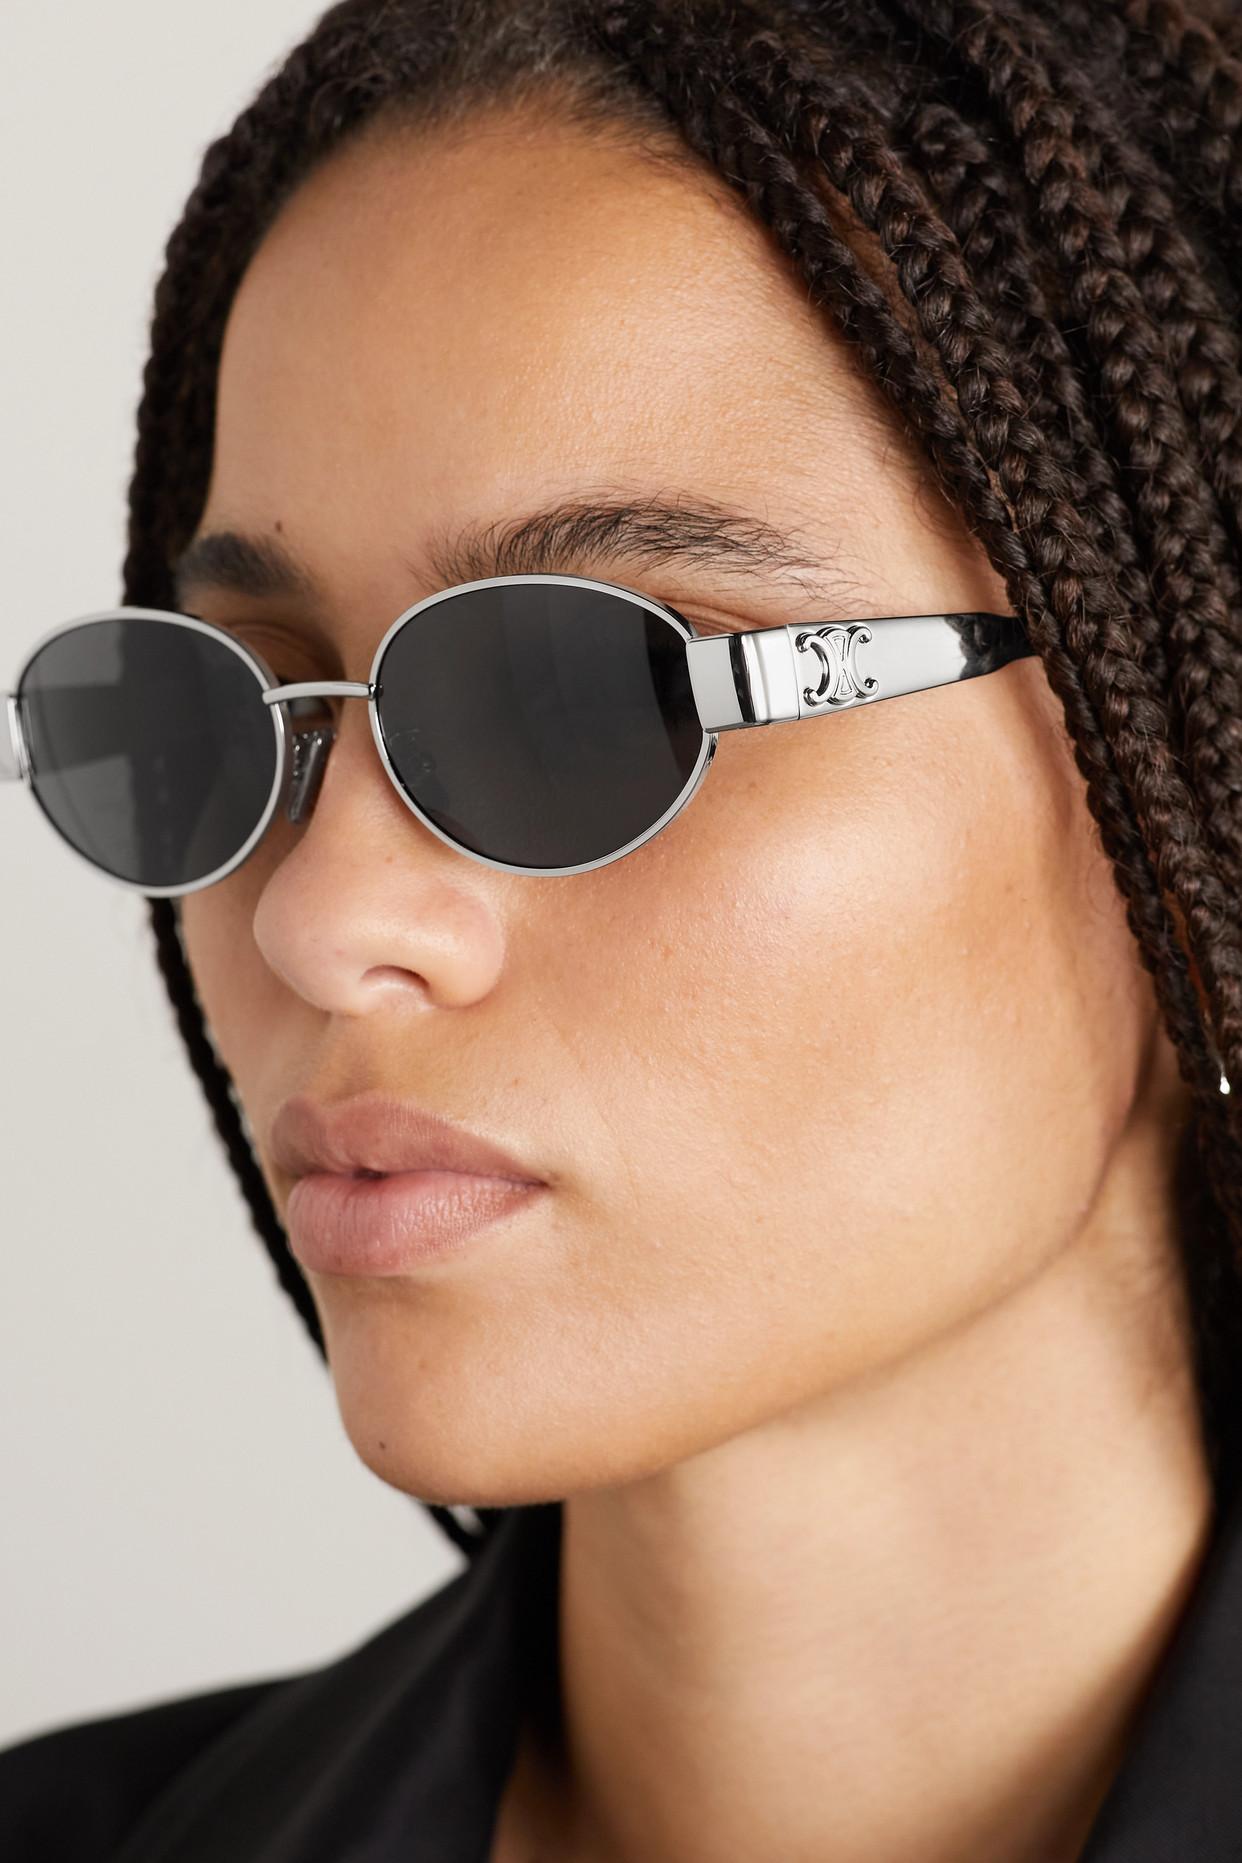 Celine Oval-frame Silver-tone And Acetate Sunglasses in Metallic